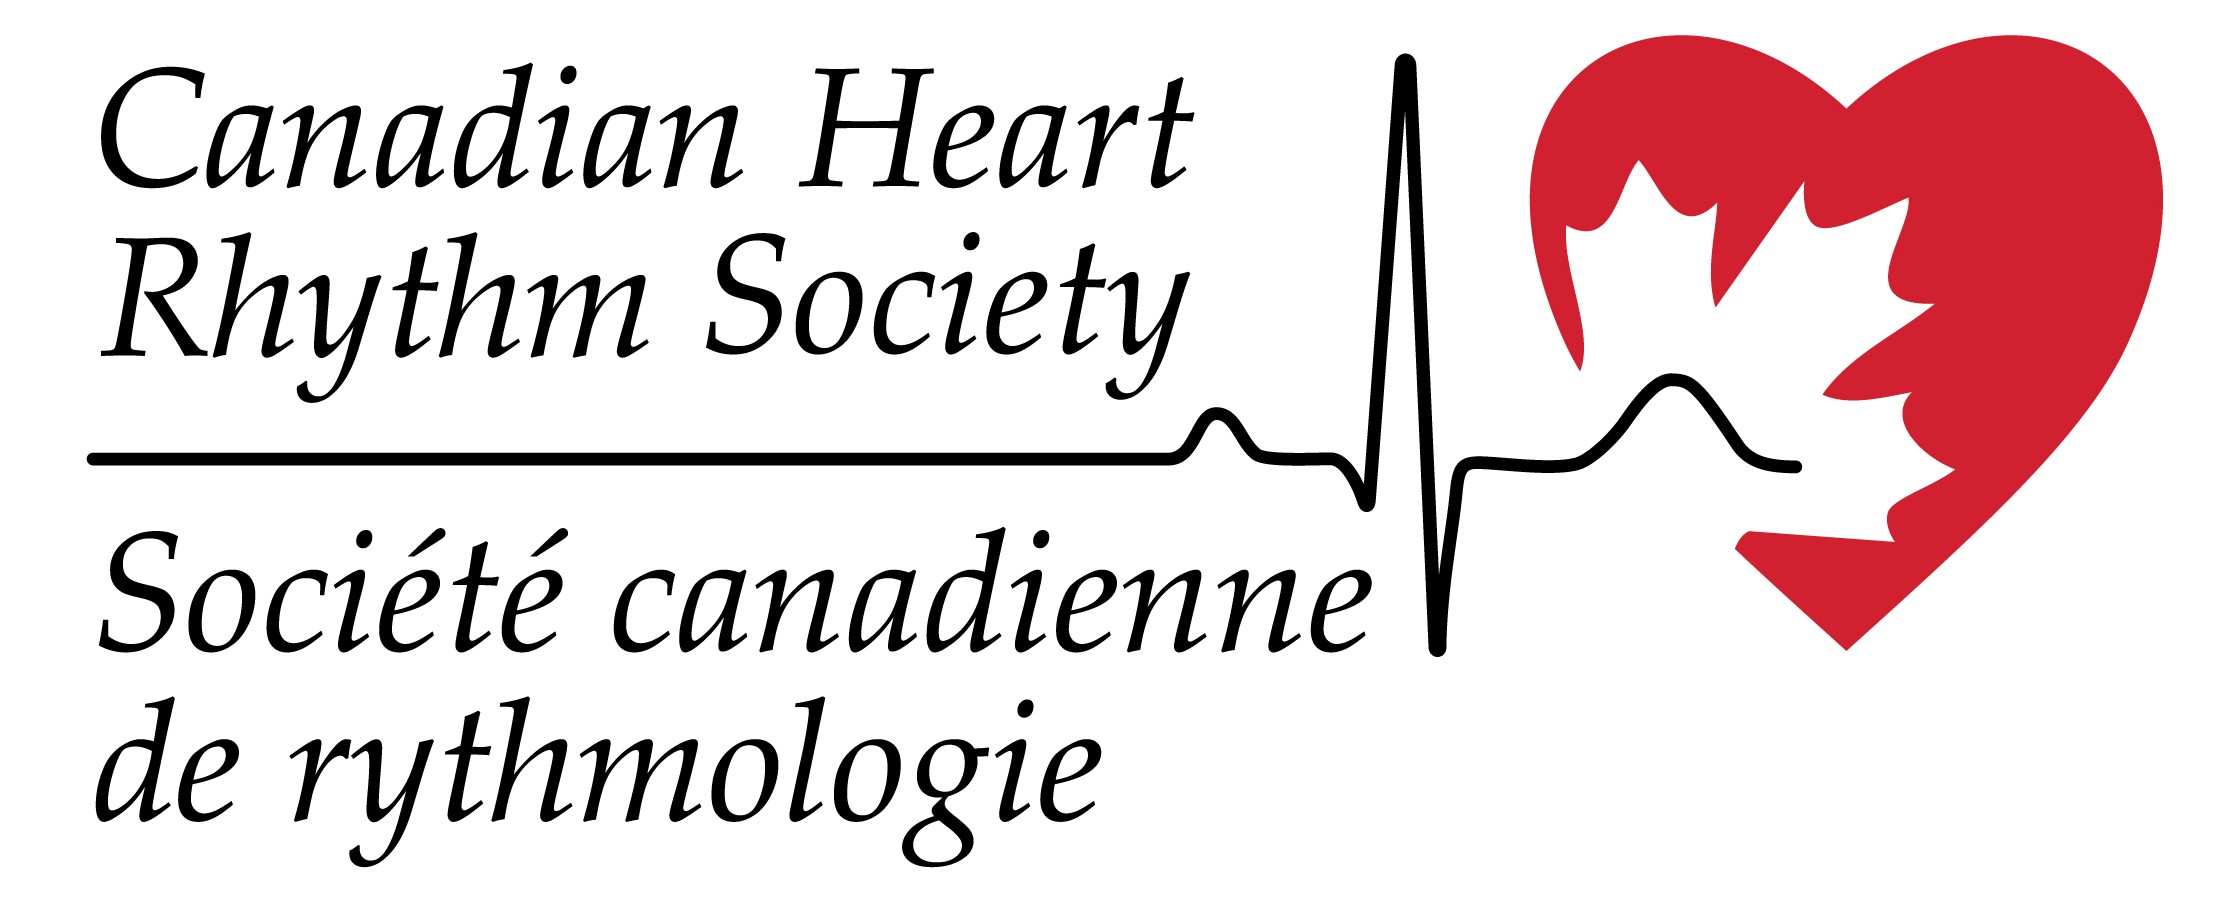 Program Canadian Heart Rhythm Society